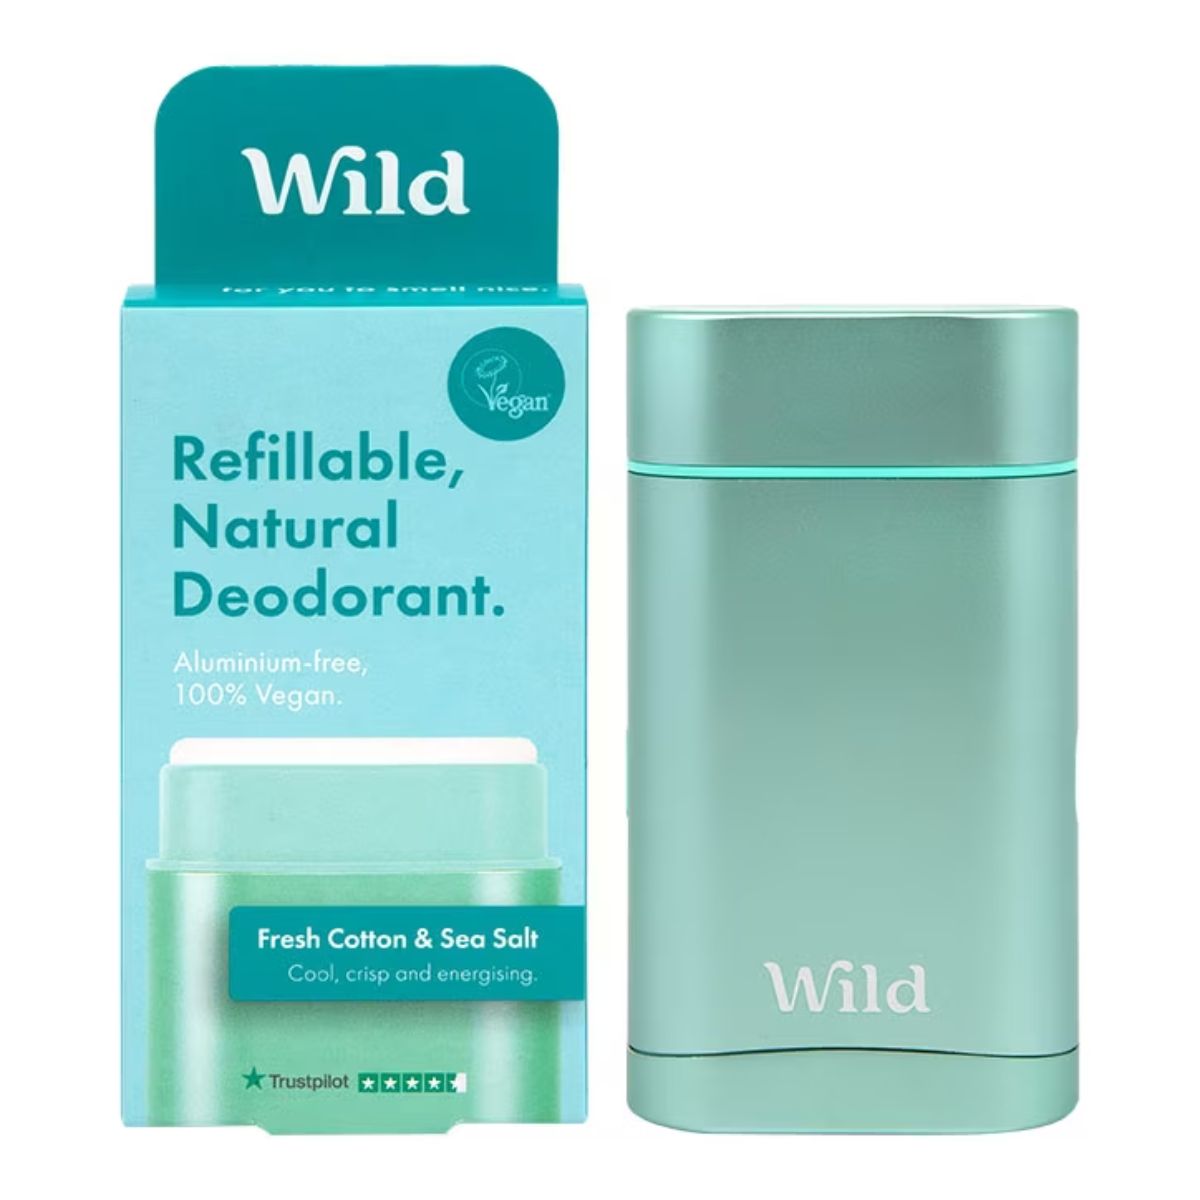 WILD Aqua Case and Fresh Cotton & Sea Salt Deodorant Starter Pack